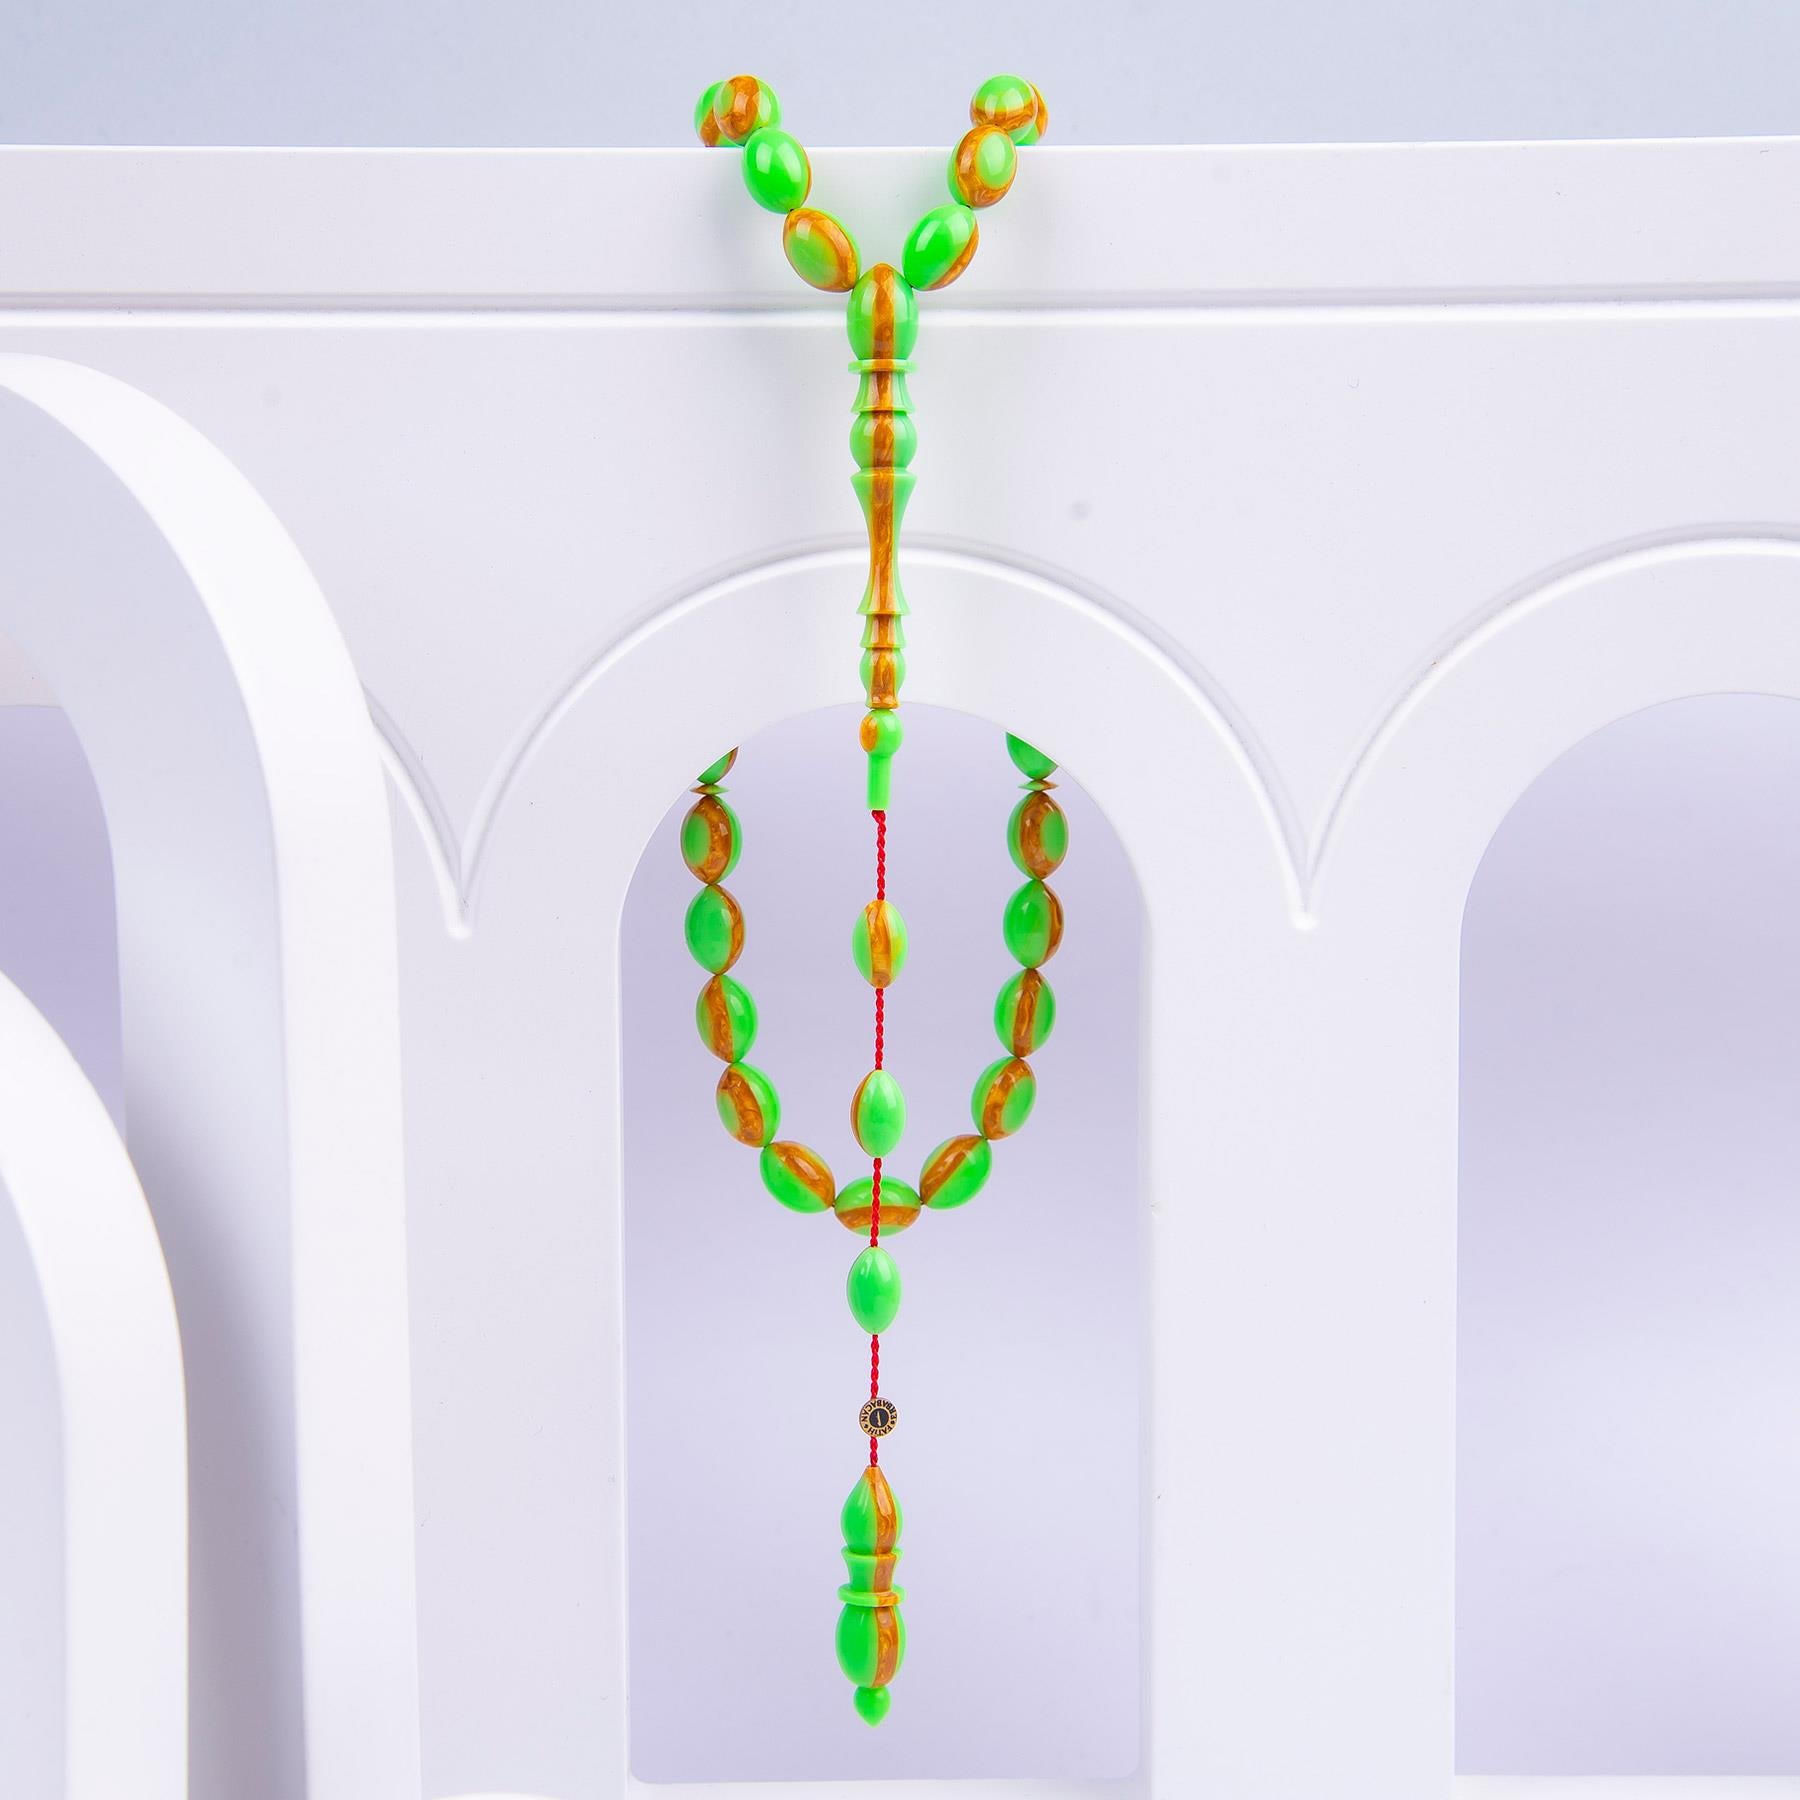 Ve Tesbih Fatih Erbabacan Large Size Prayer Beads 3